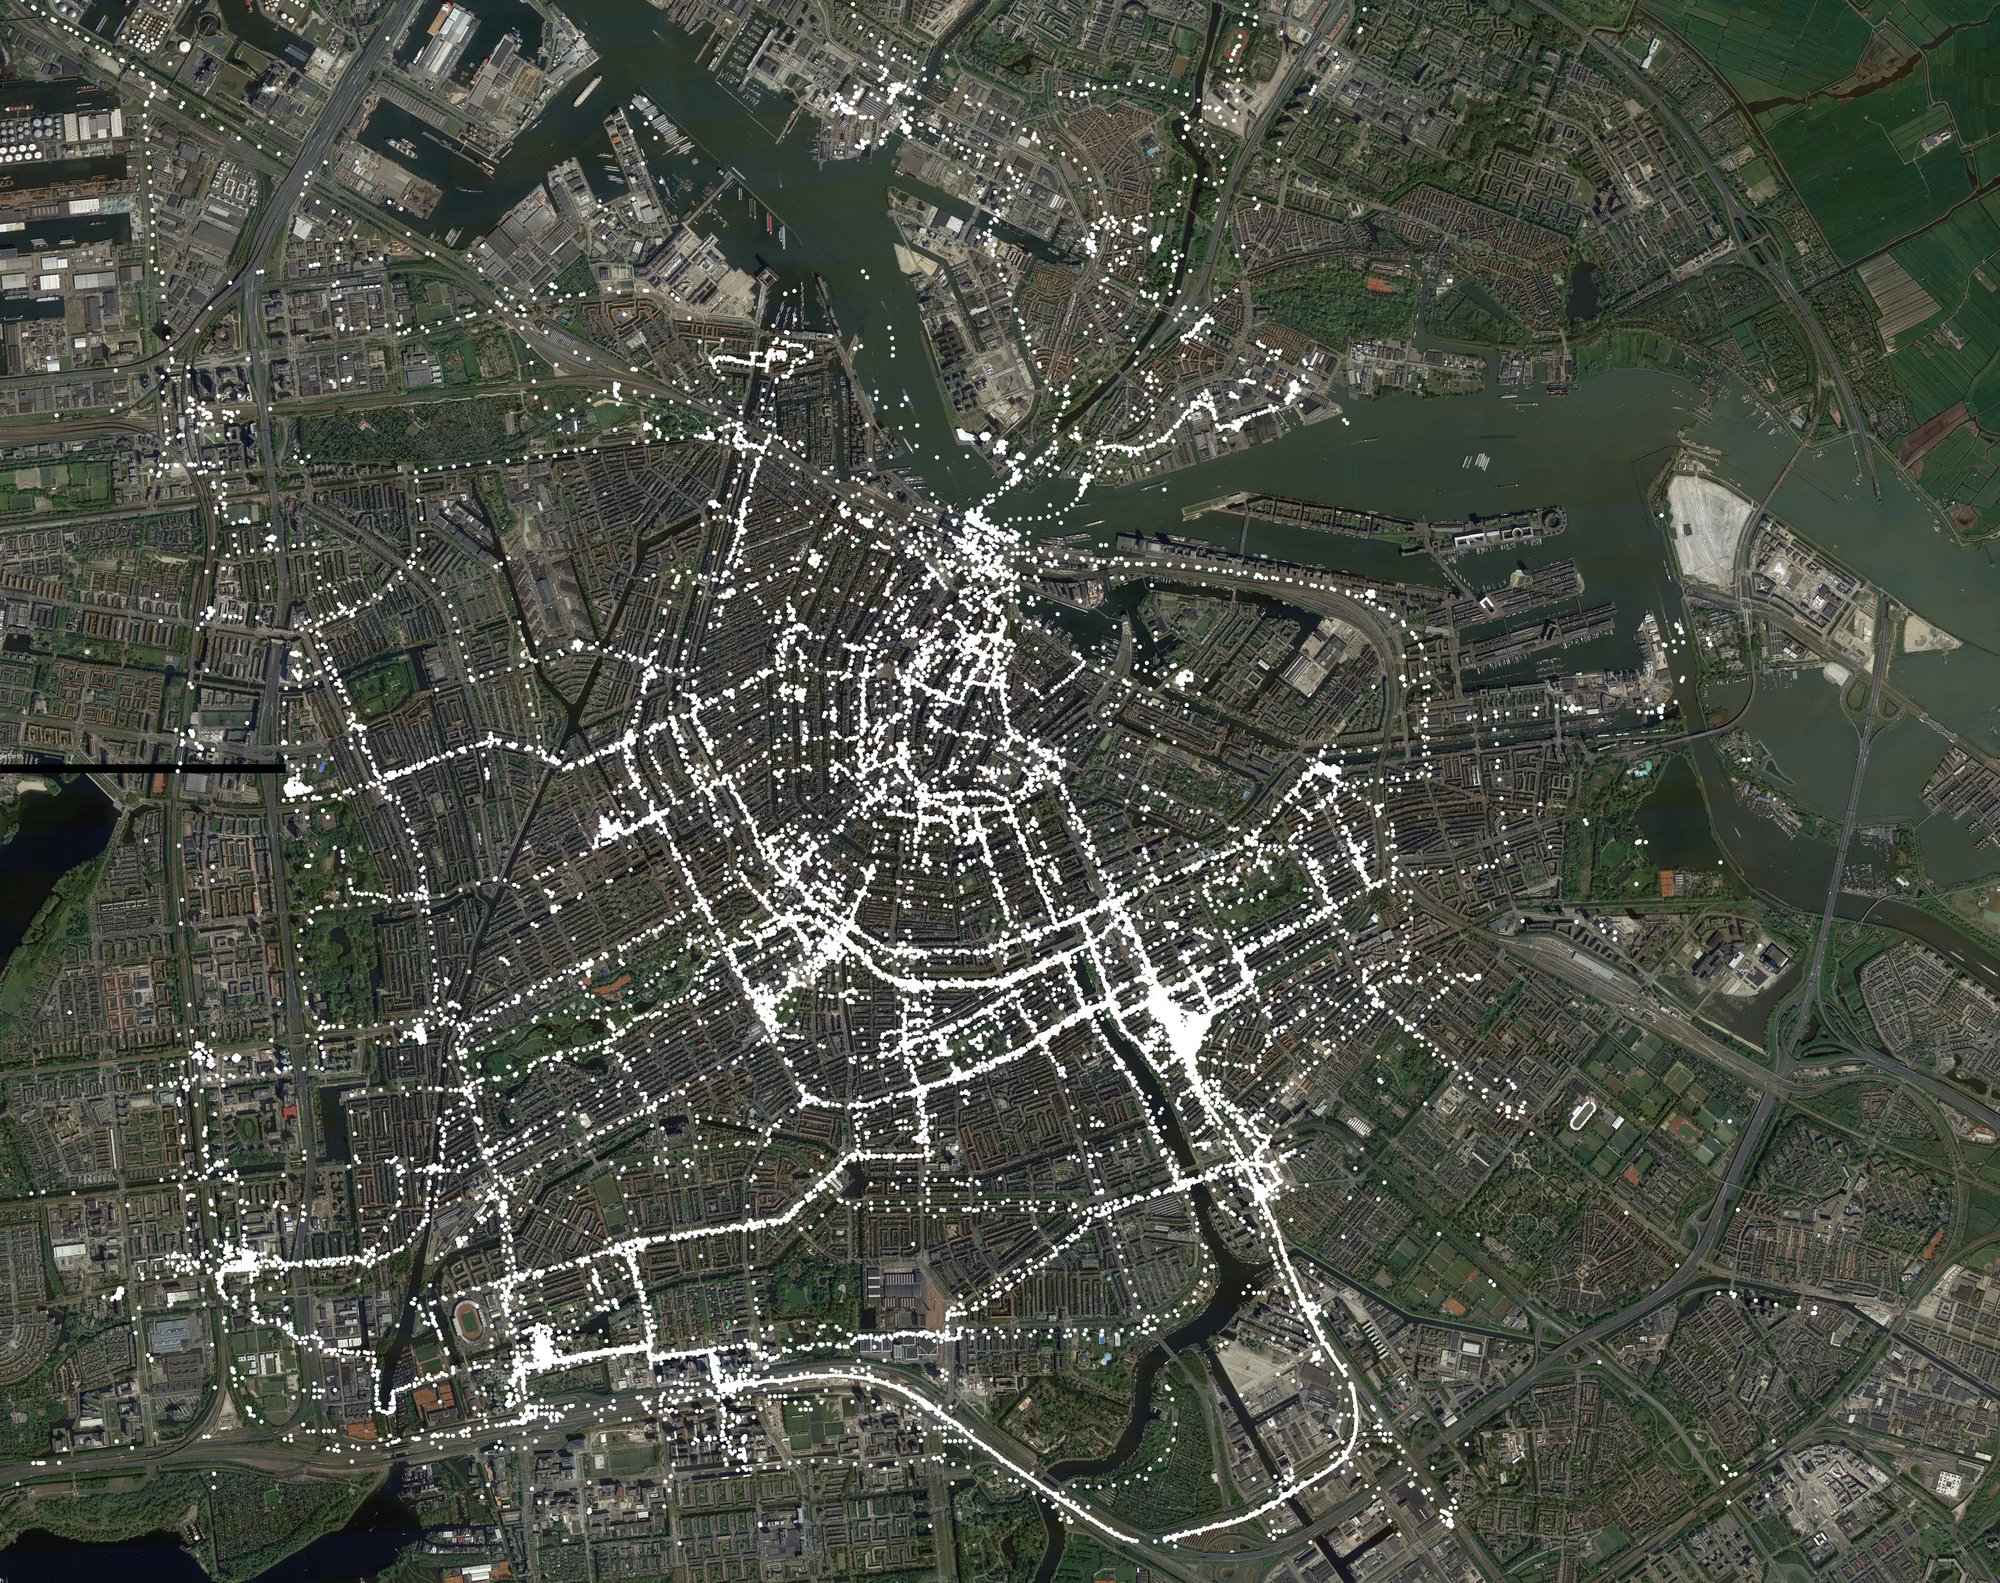 Plot overlaid onto satellite imagery from Google Earth